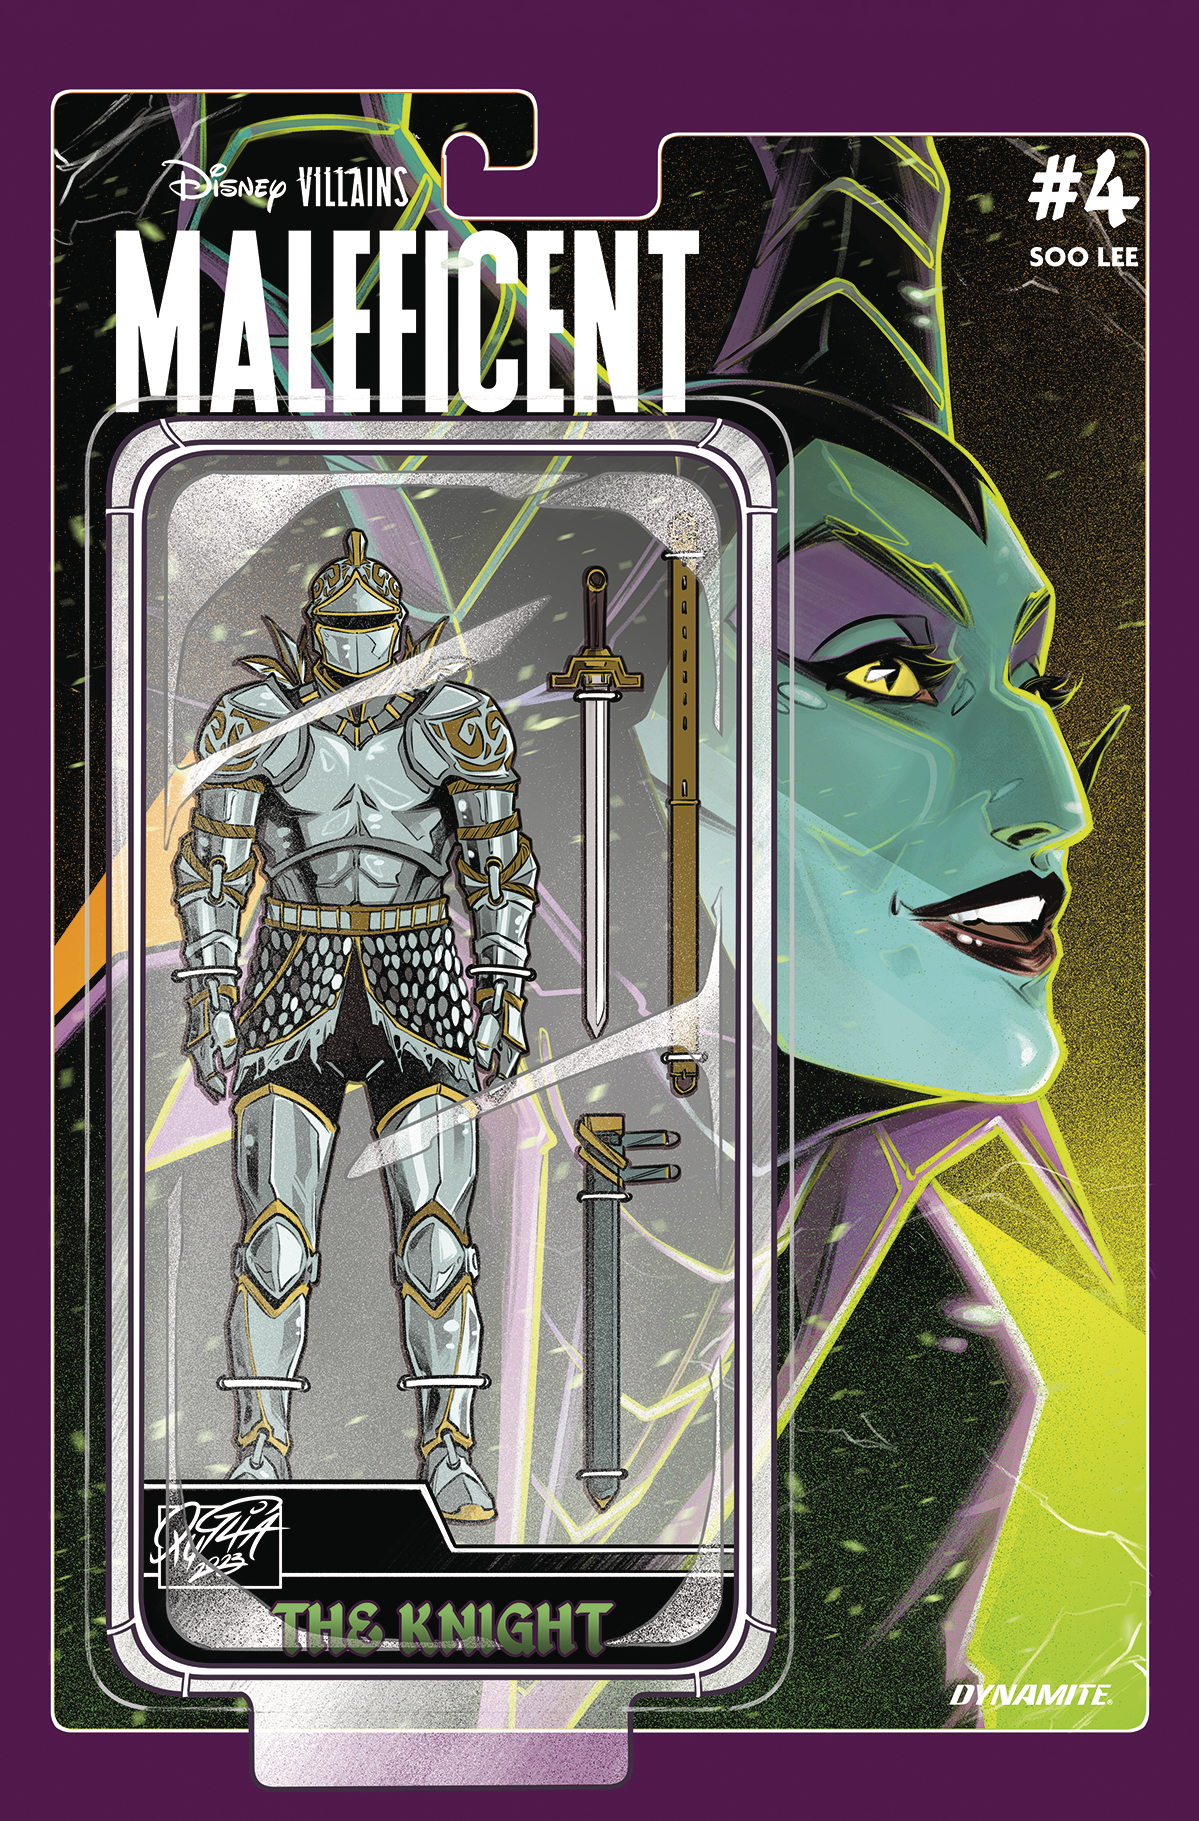 Disney Villains Maleficent No. 1 Ivan Talavera Variants LTD 400 Each -  Purple Variant (1 Comic)